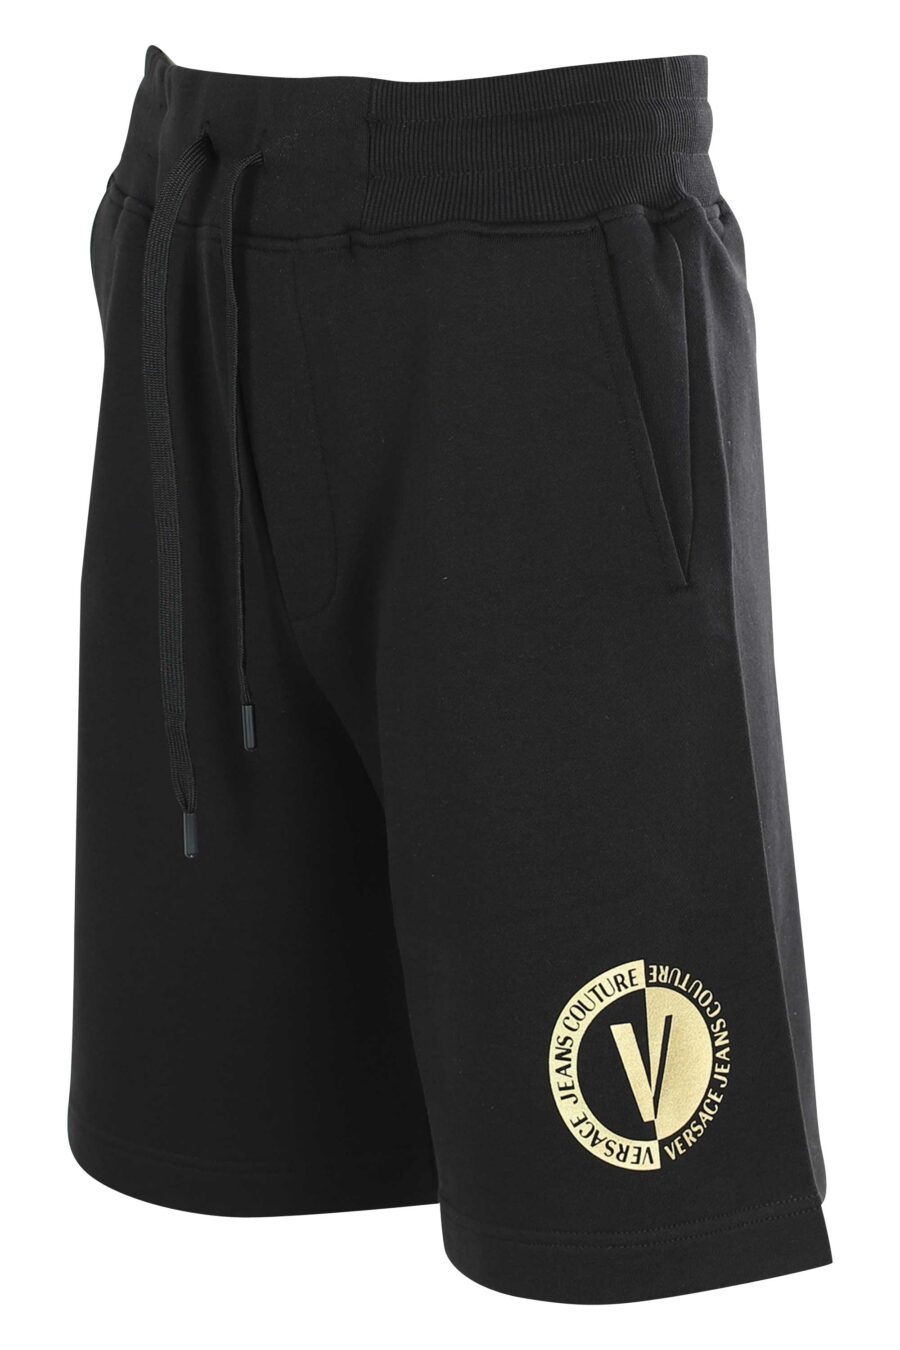 Jogginghose schwarz mit rundem Mini-Logo - 8052019230420 2